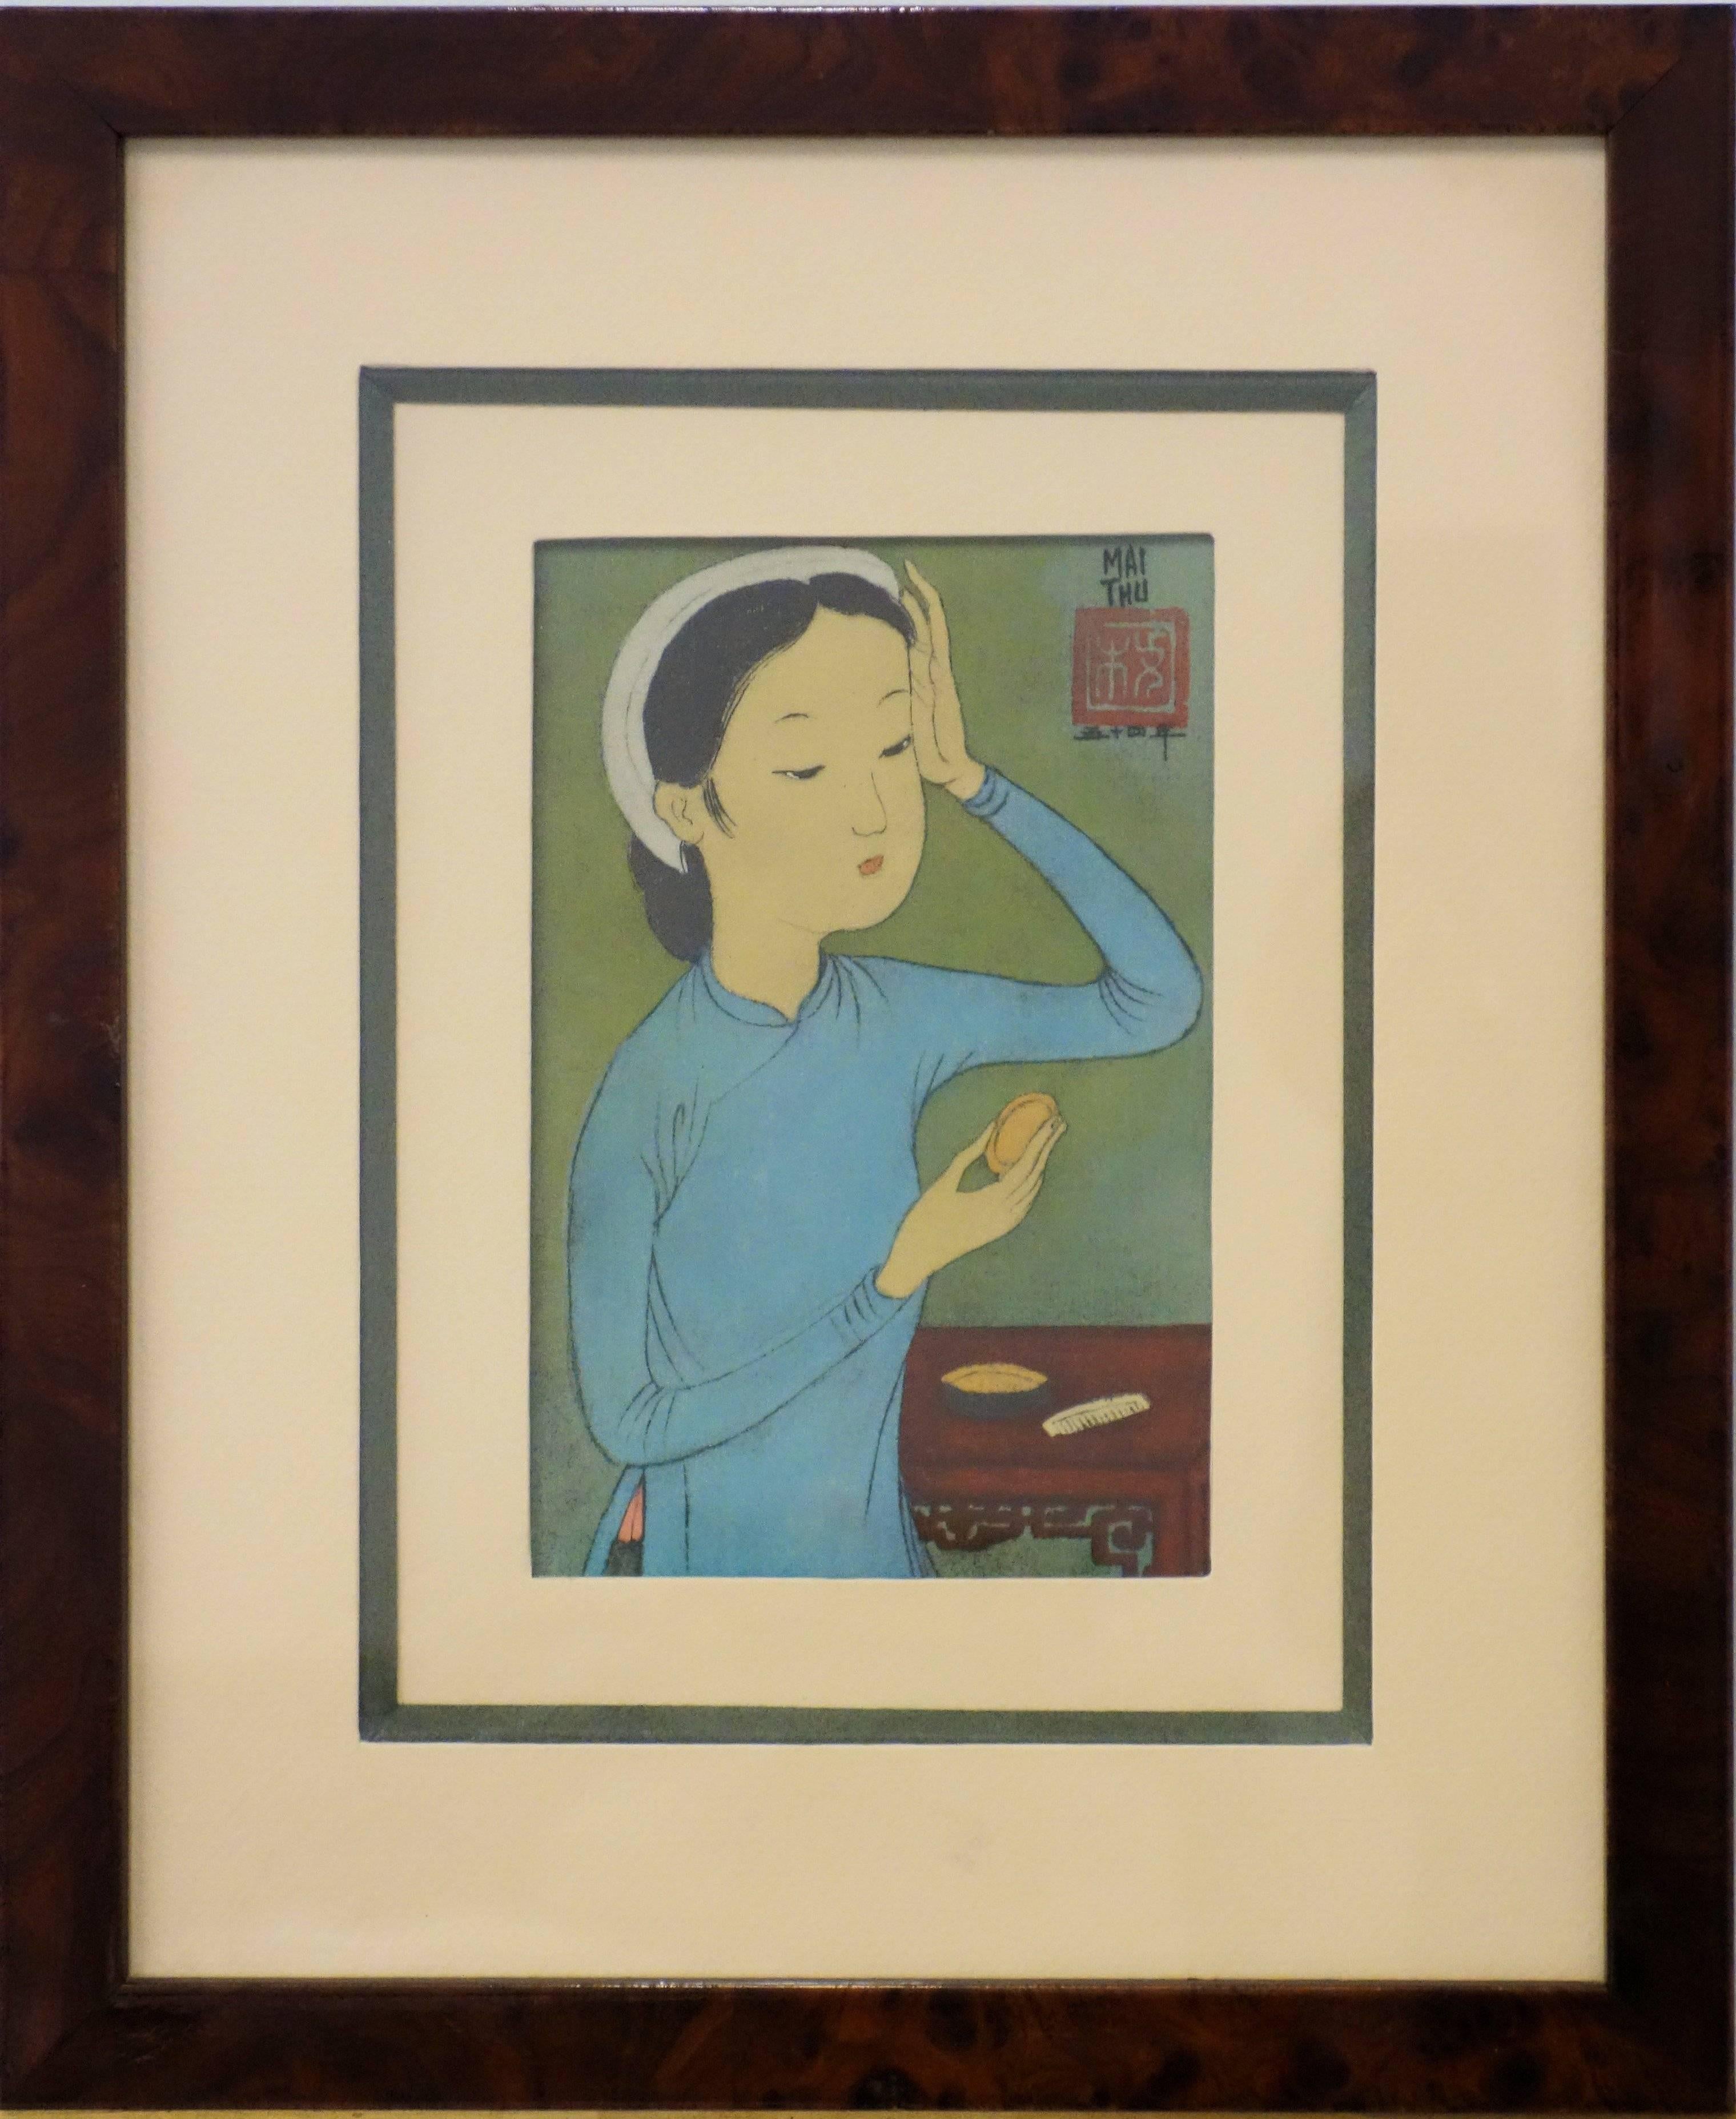 Woman Checking her Makeup - Original lithograph on silk - 1961 - Gray Figurative Print by Mai Thu